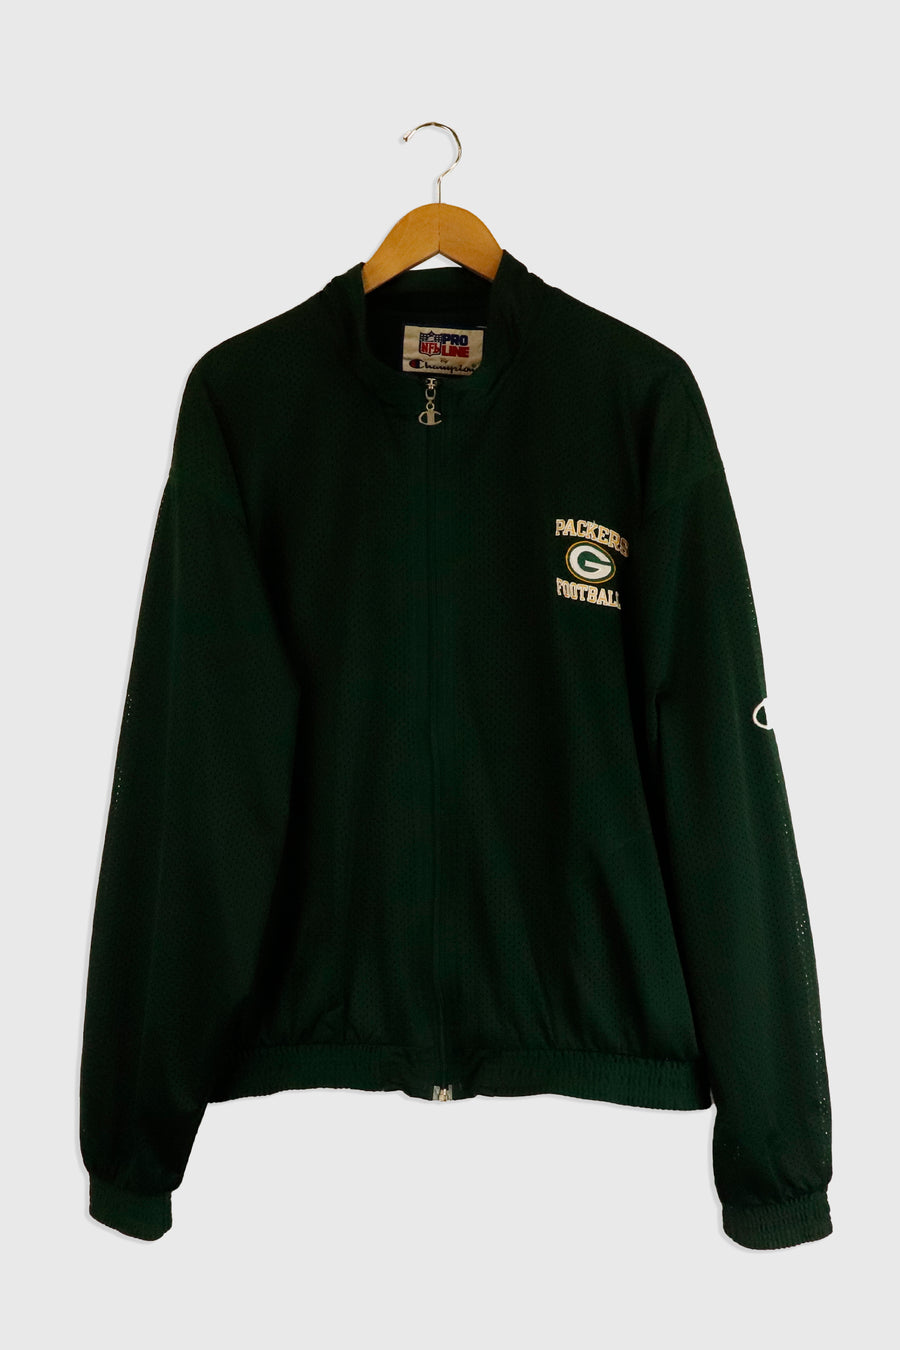 Vintage Champion NFL Pro Line Green Bay Packerws Full Zip Jacket